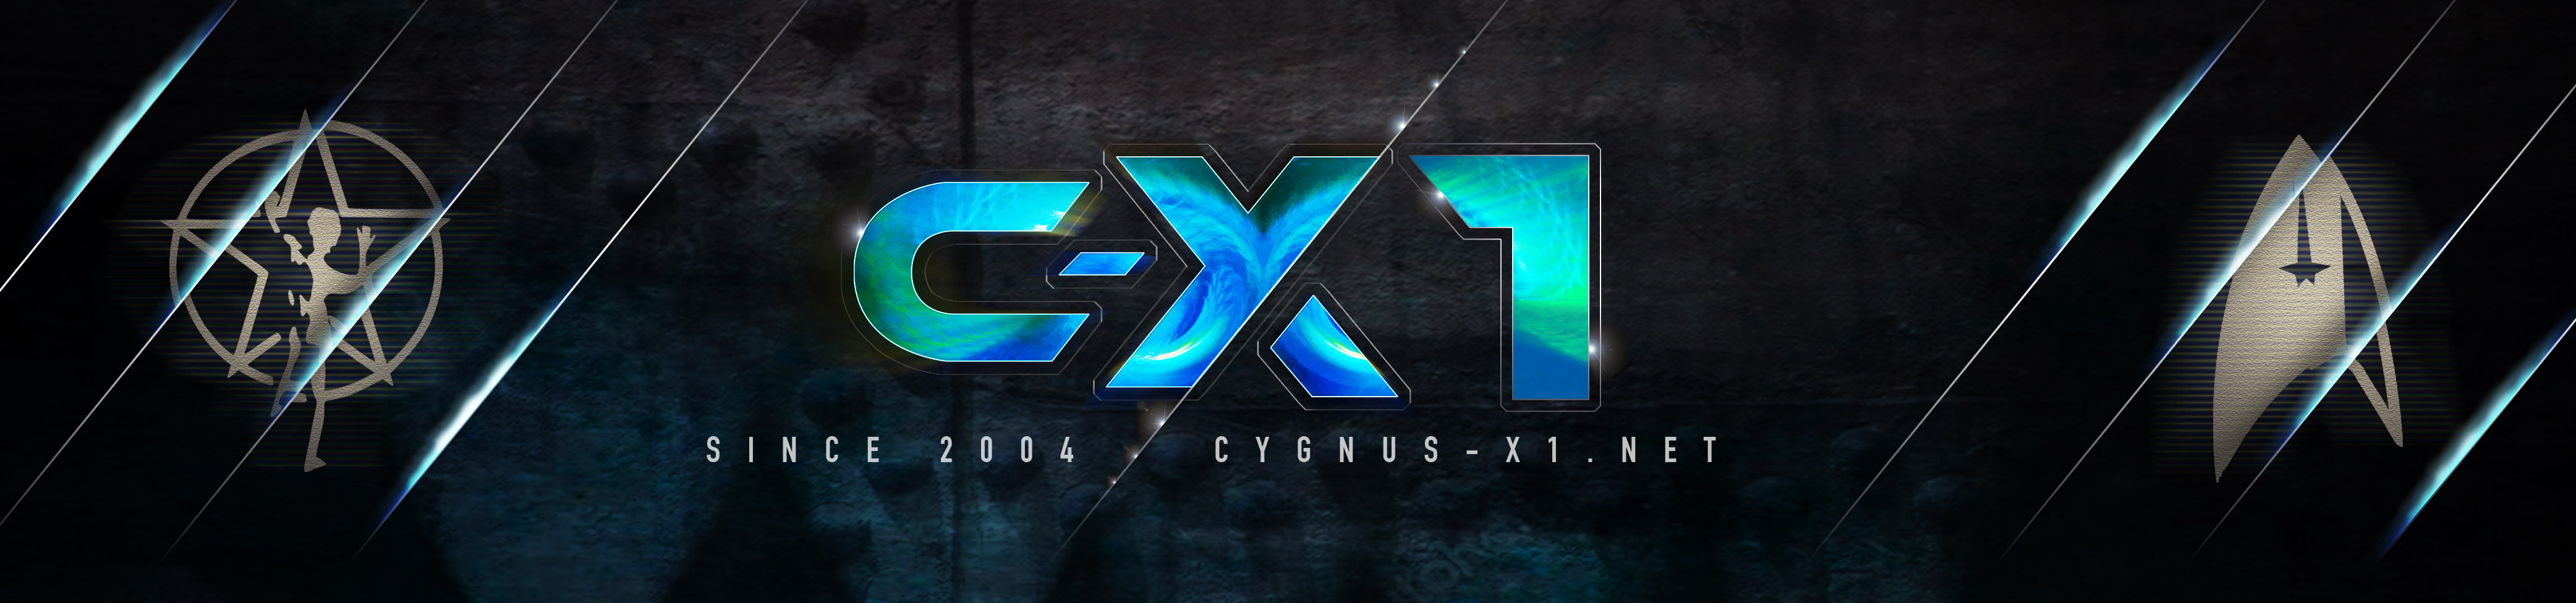 Cygnus-X1.Net: A Tribute to Rush and Star Trek